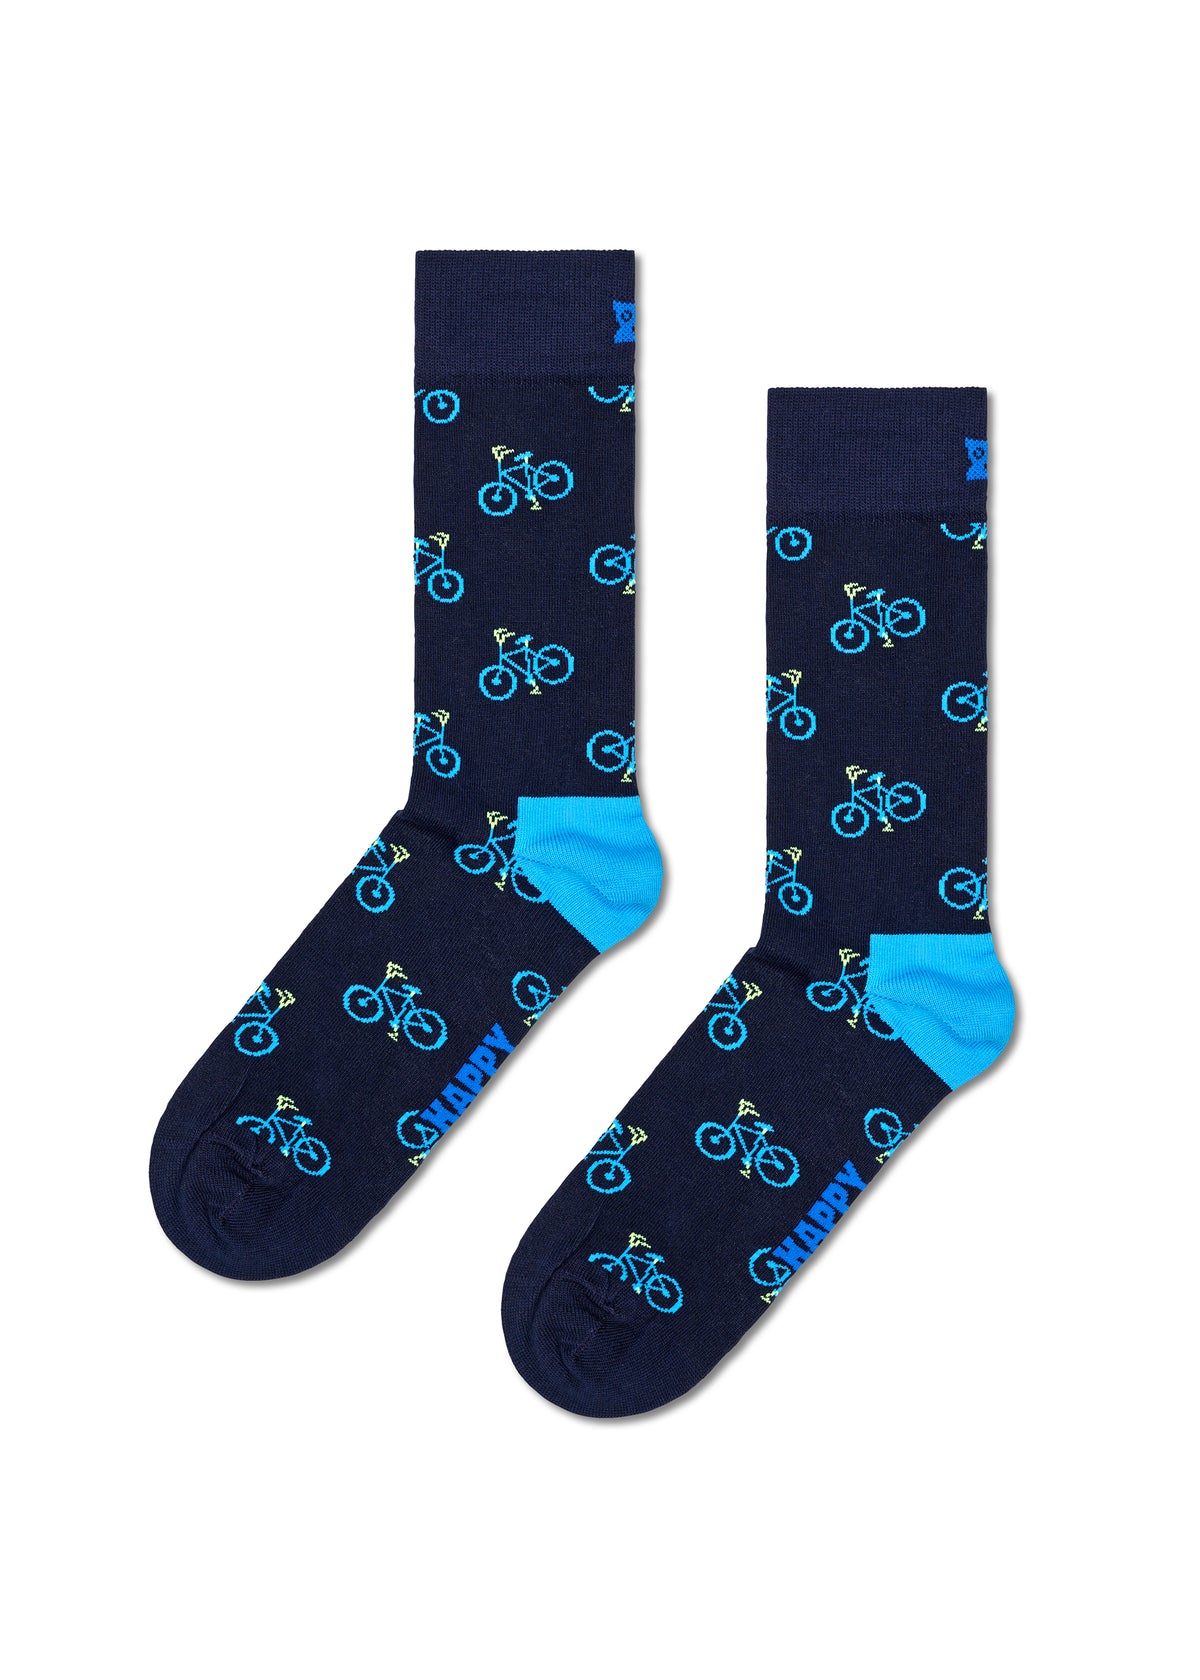 Adult socks - Bike Blue